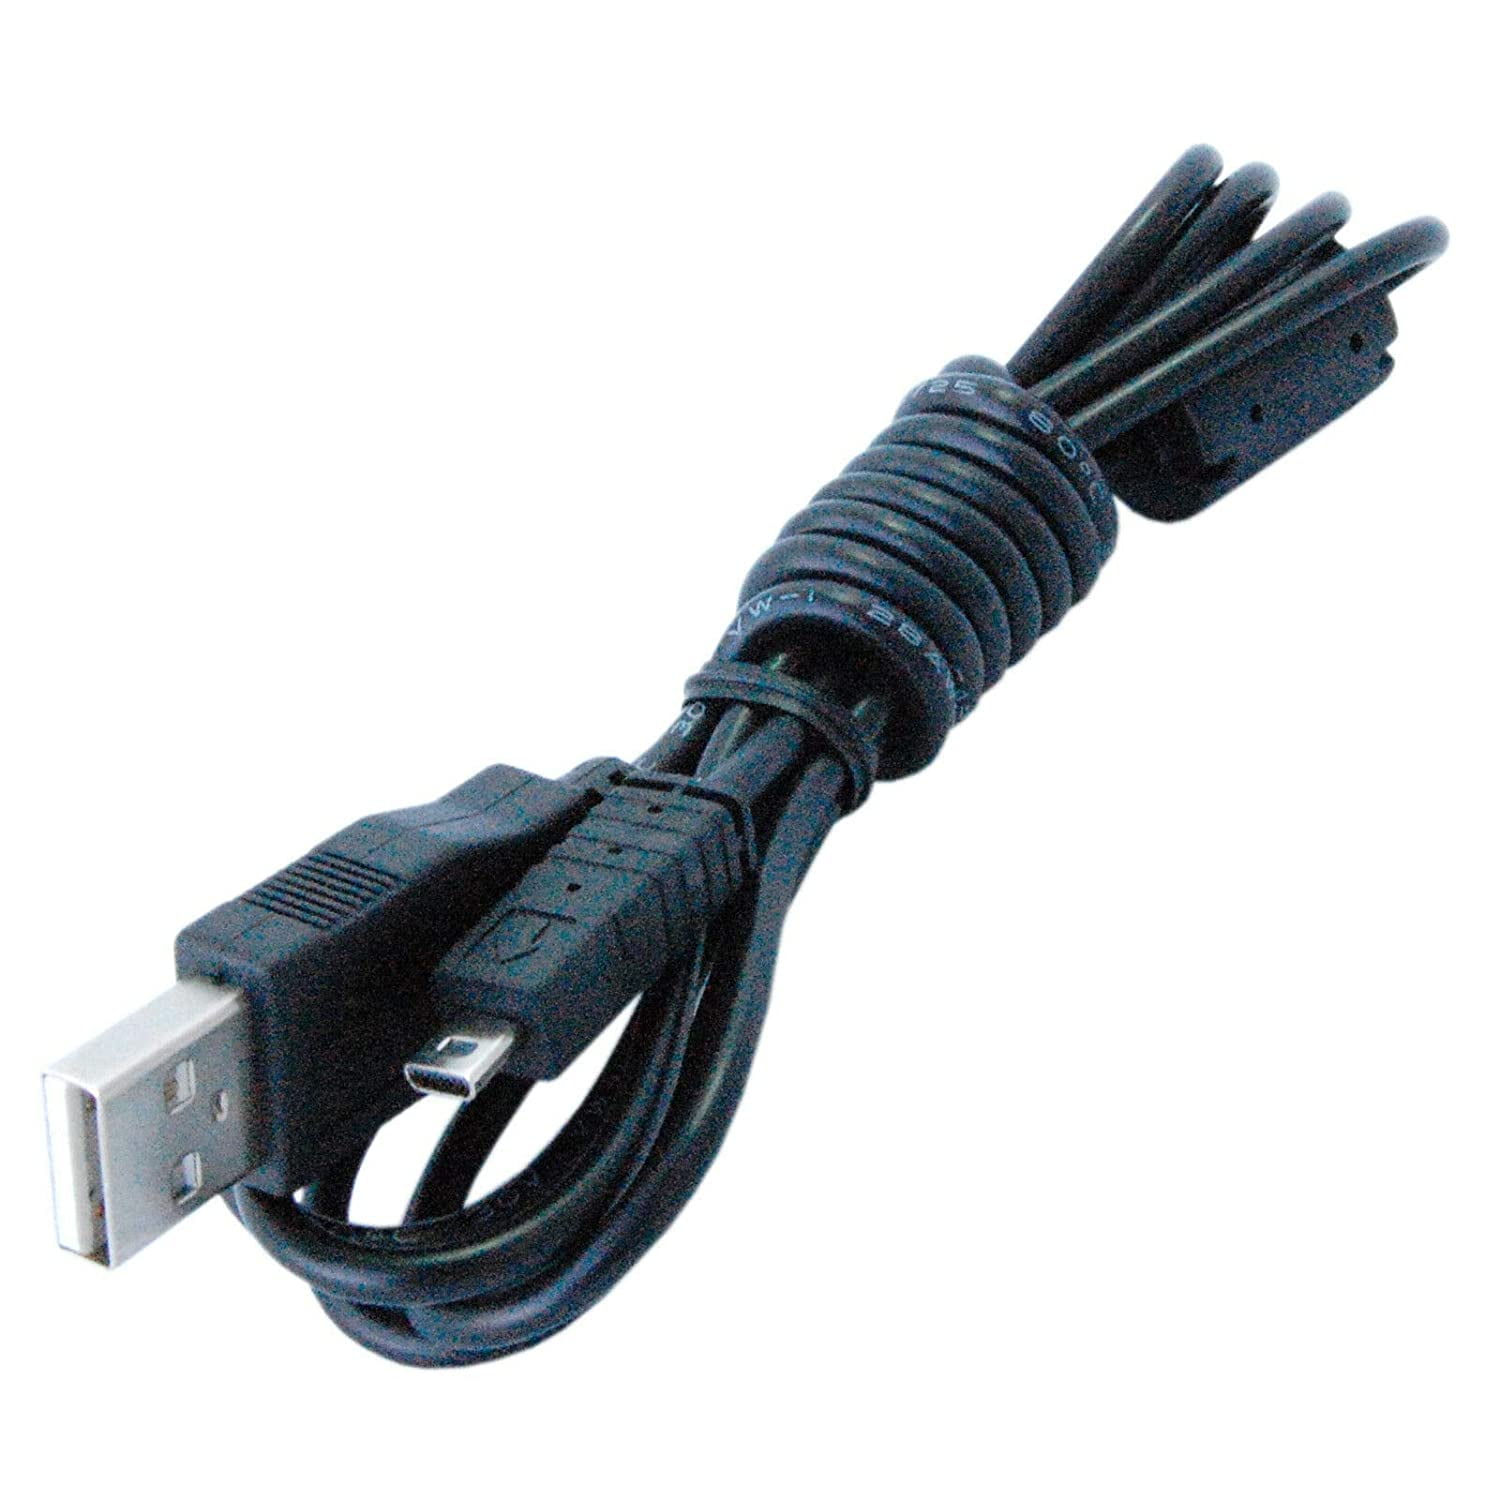 Atlas Nucleair Offer HQRP USB Cable / Cord compatible with FujiFilm Finepix AX280 AX300 AX305  AX330 AX335 AX350 AX355 AX360 Digital Camera - Walmart.com